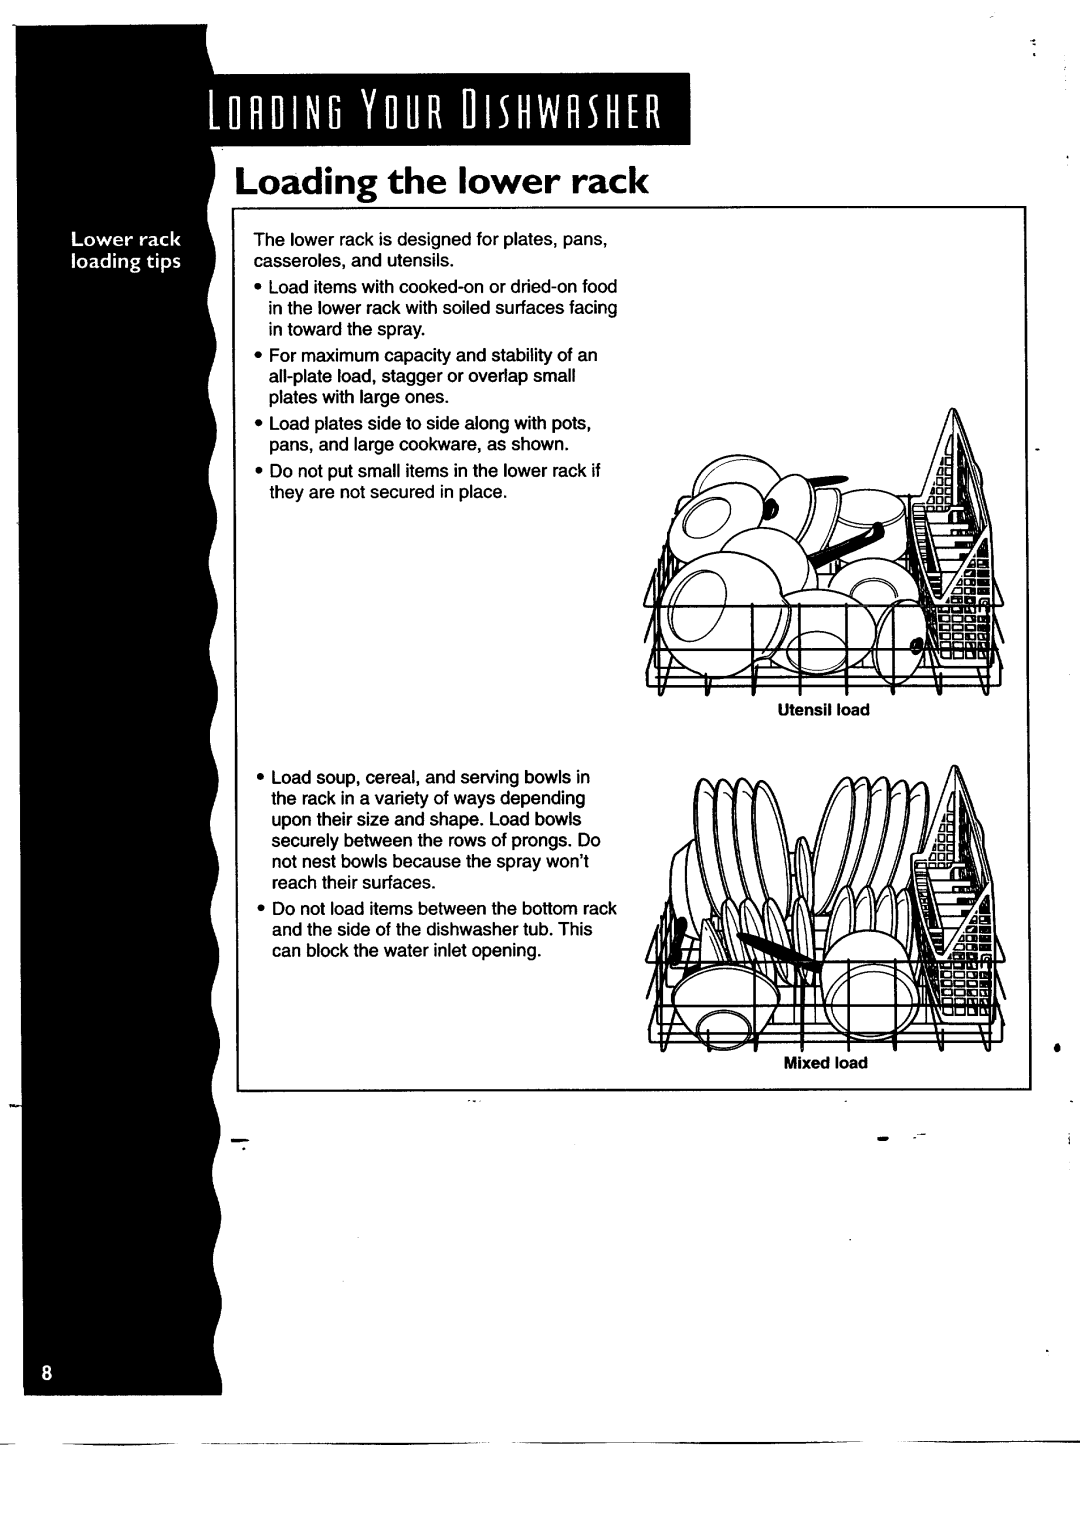 KitchenAid KUDH24SE manual Loading the lower rack 